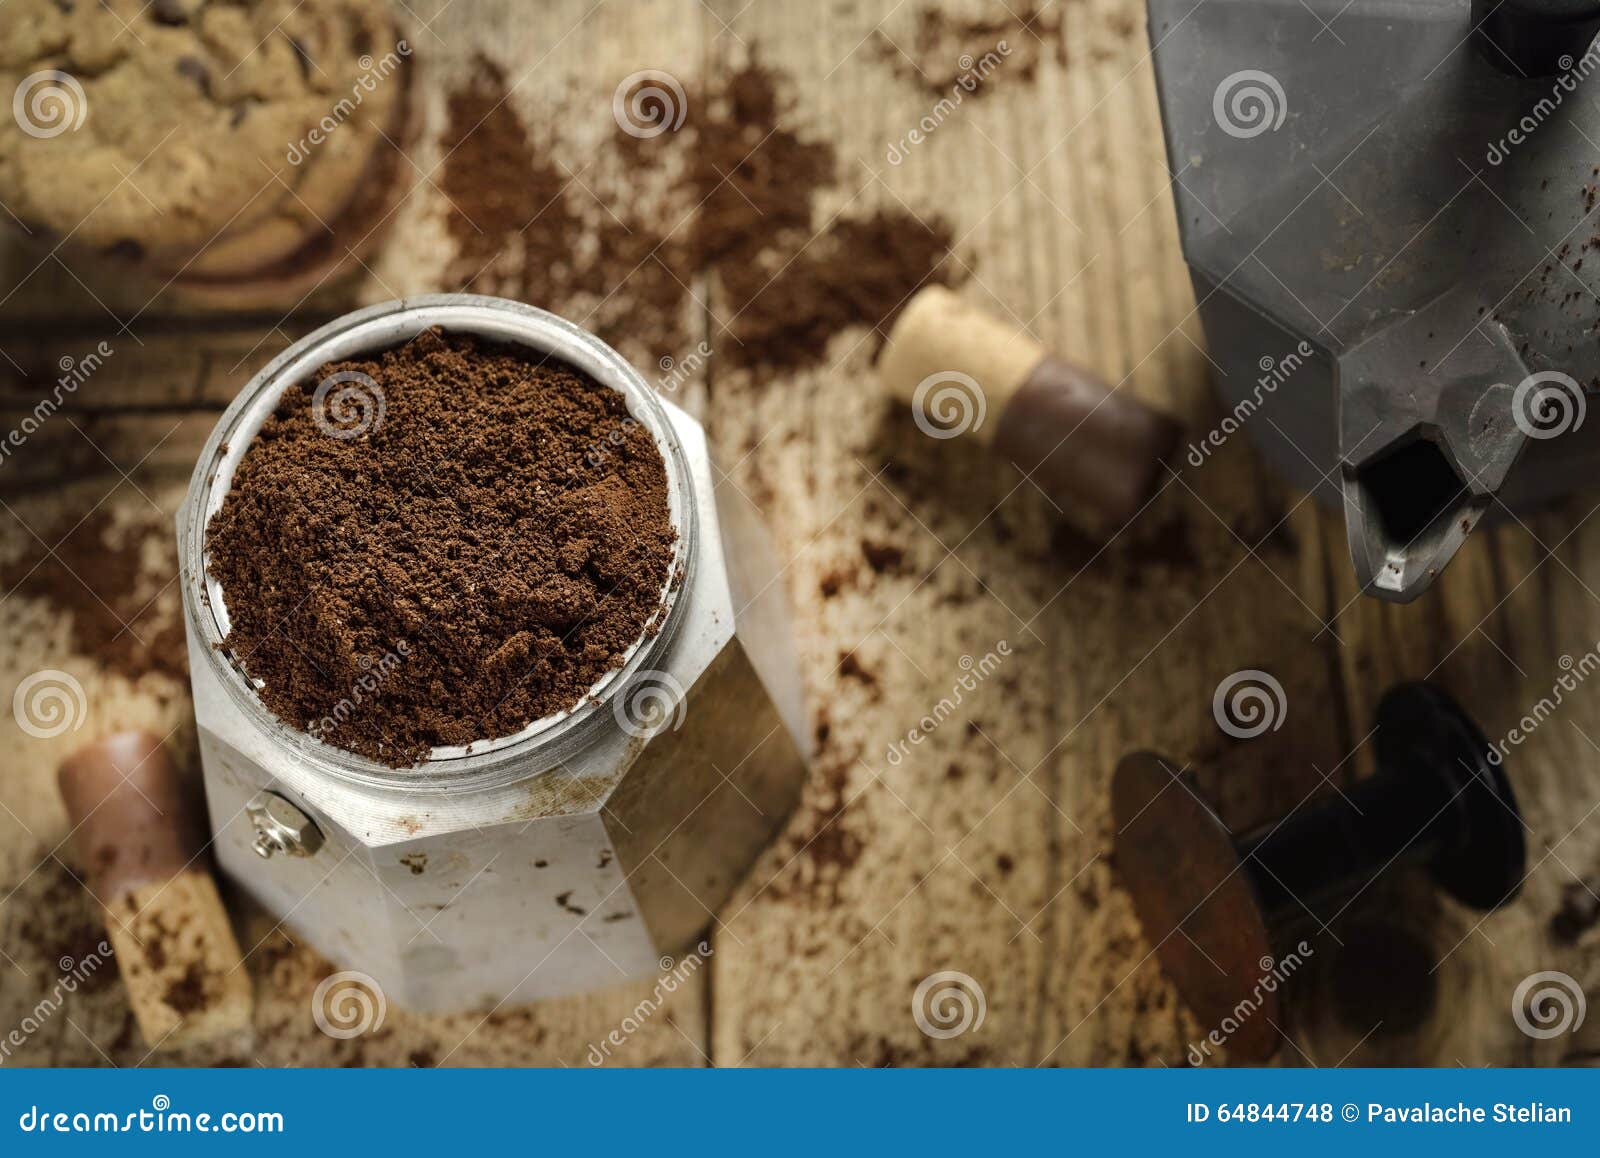 moka express coffee maker and cookie